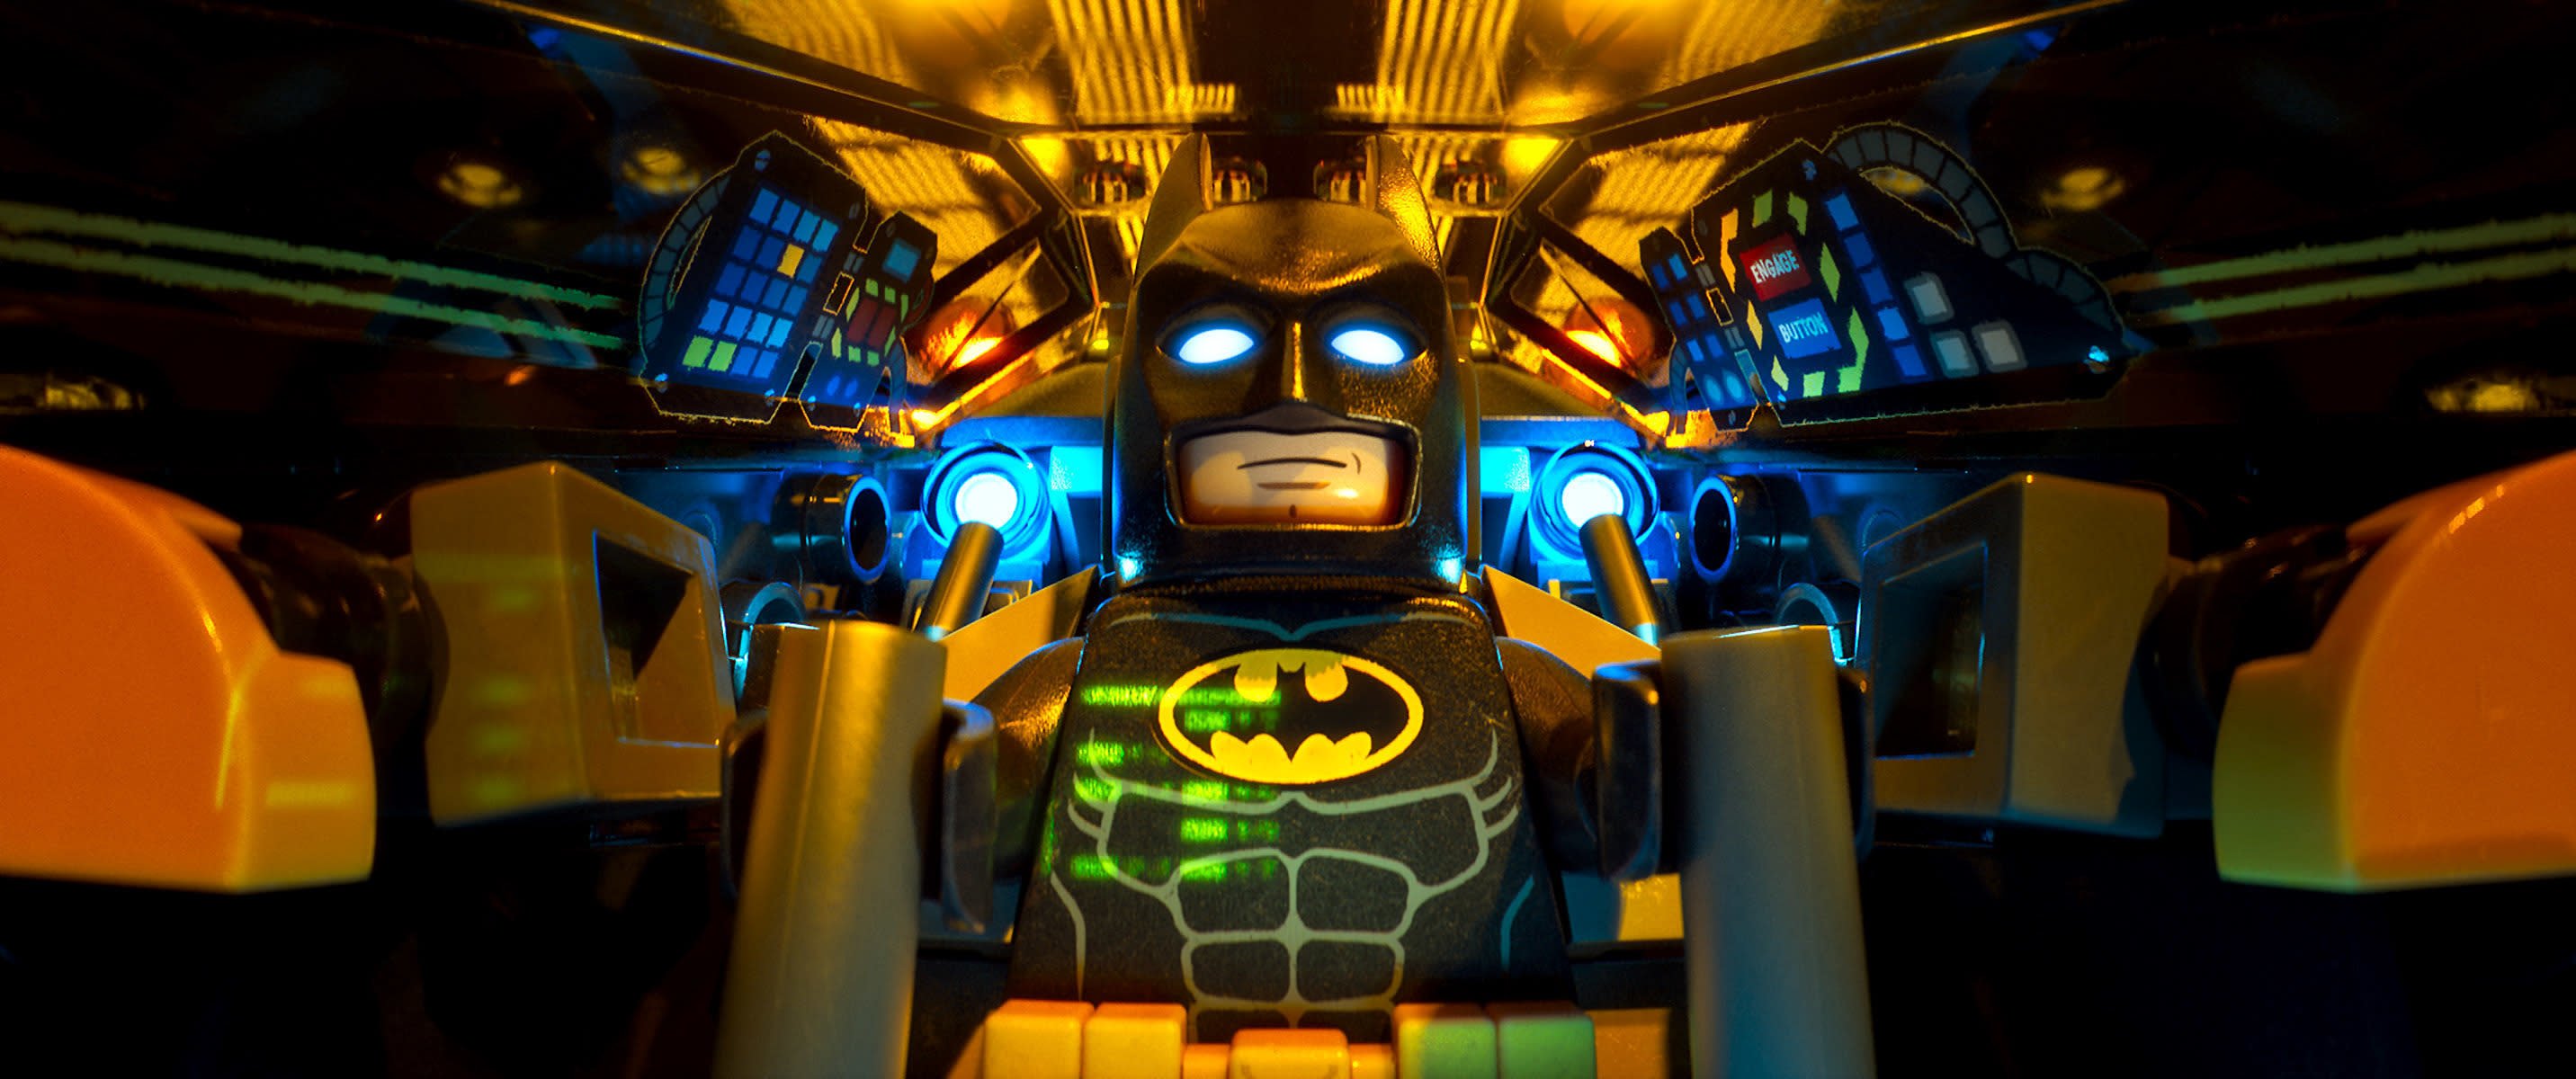 'Lego Batman' dominates 'Fifty Shades Darker' at box office